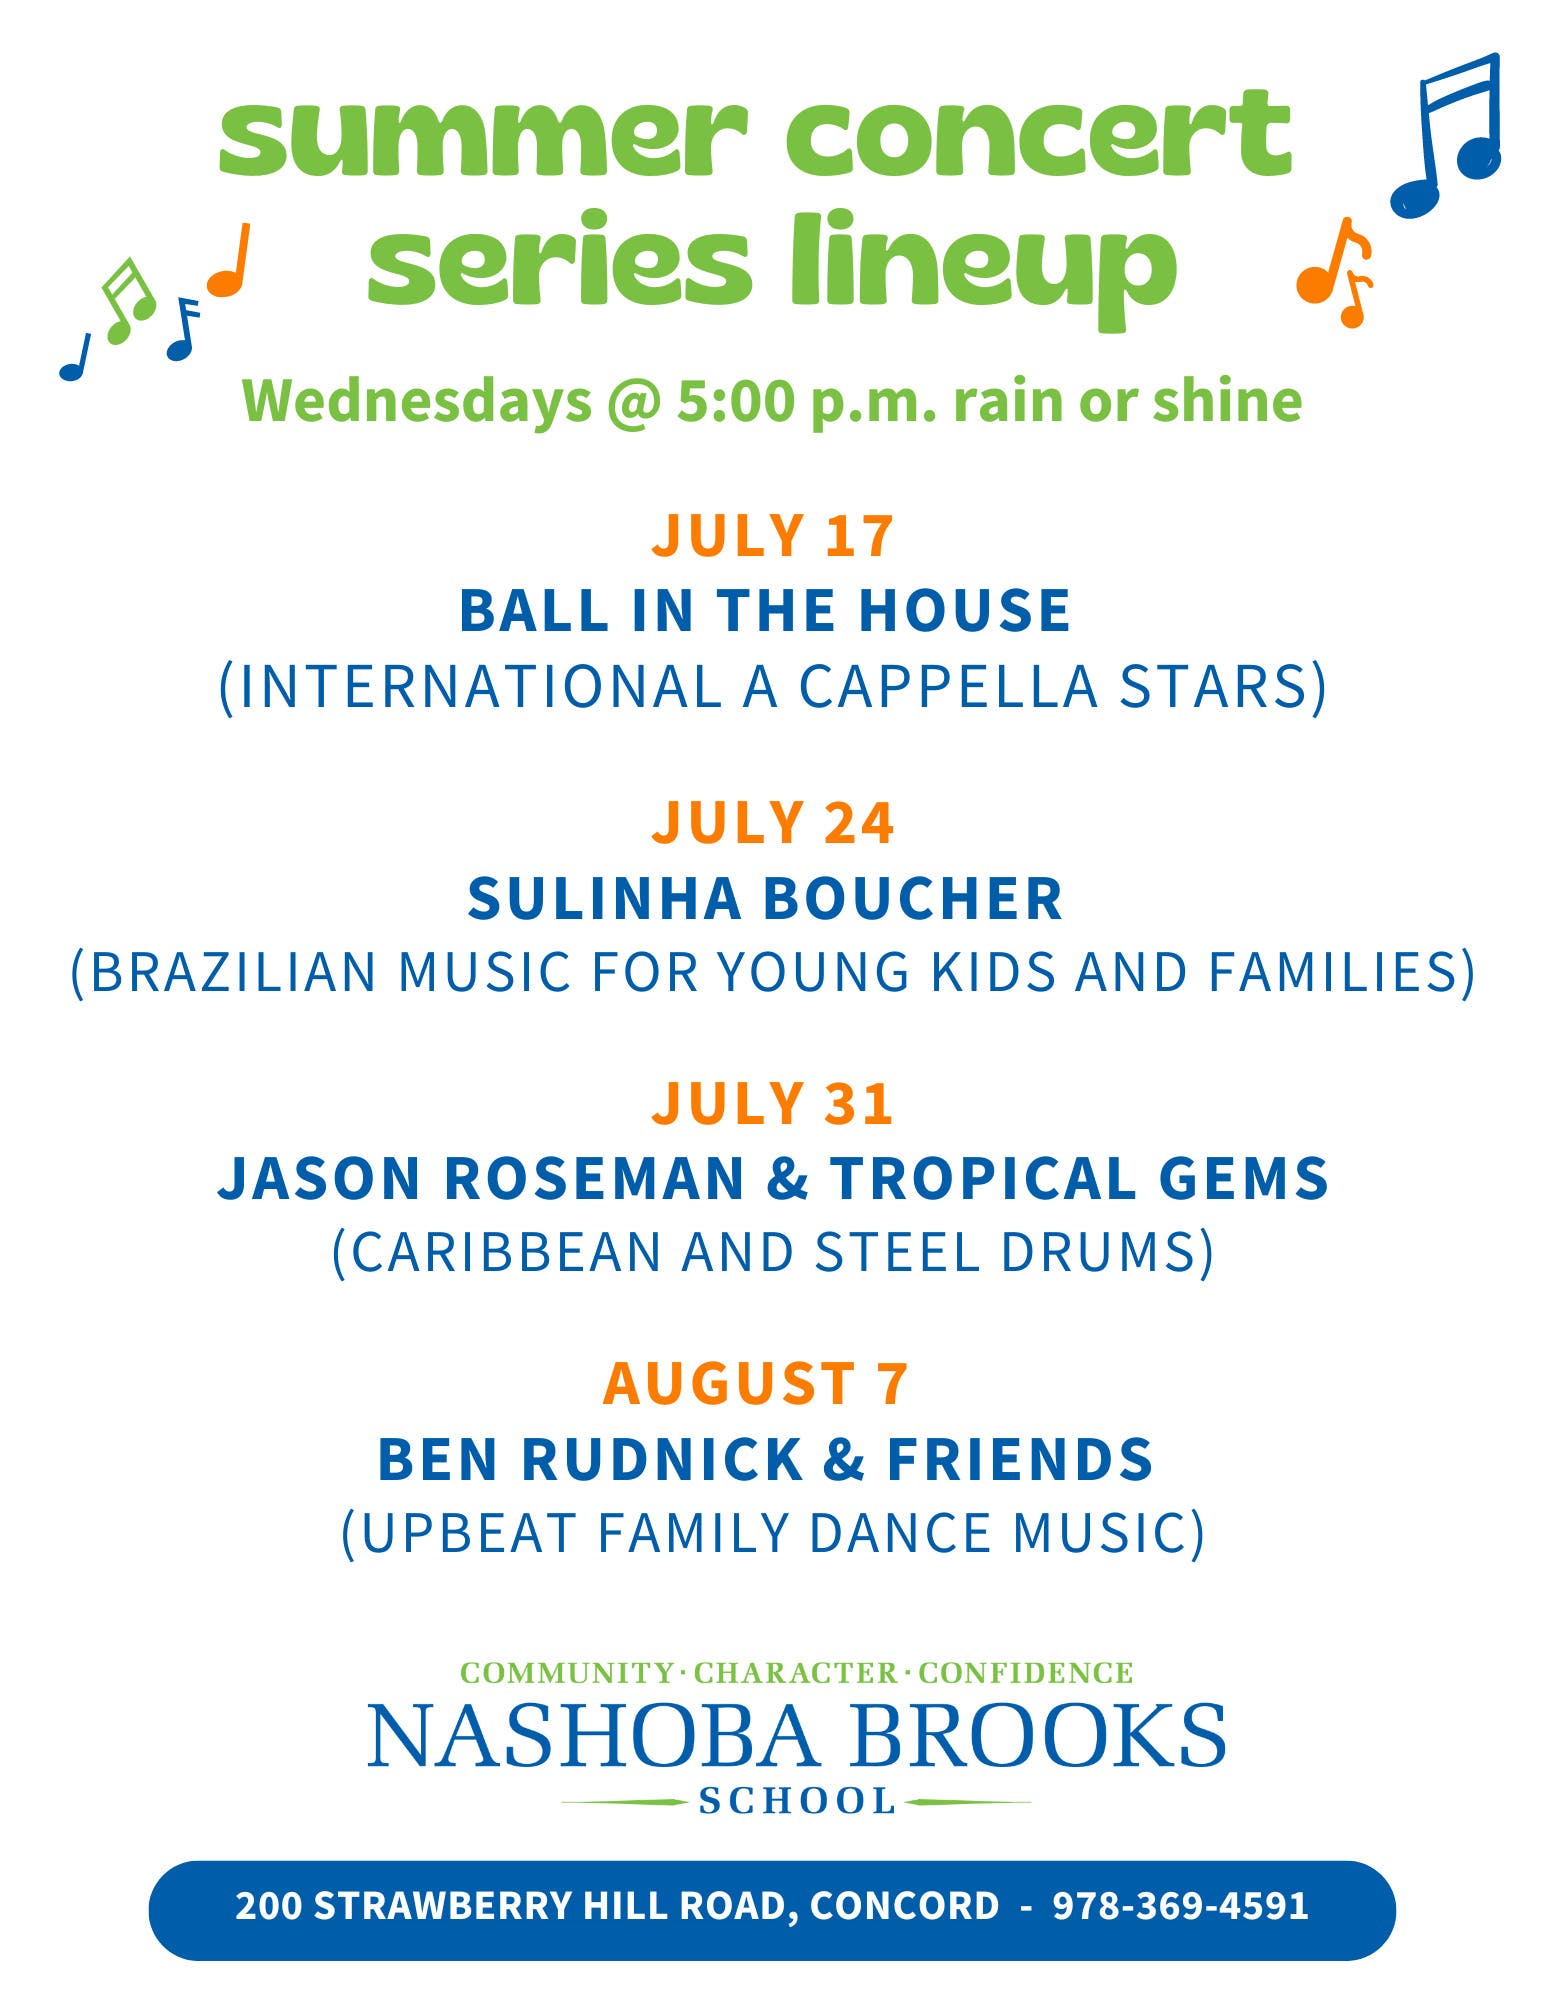 Nashoba Brooks School Summer Concert Series